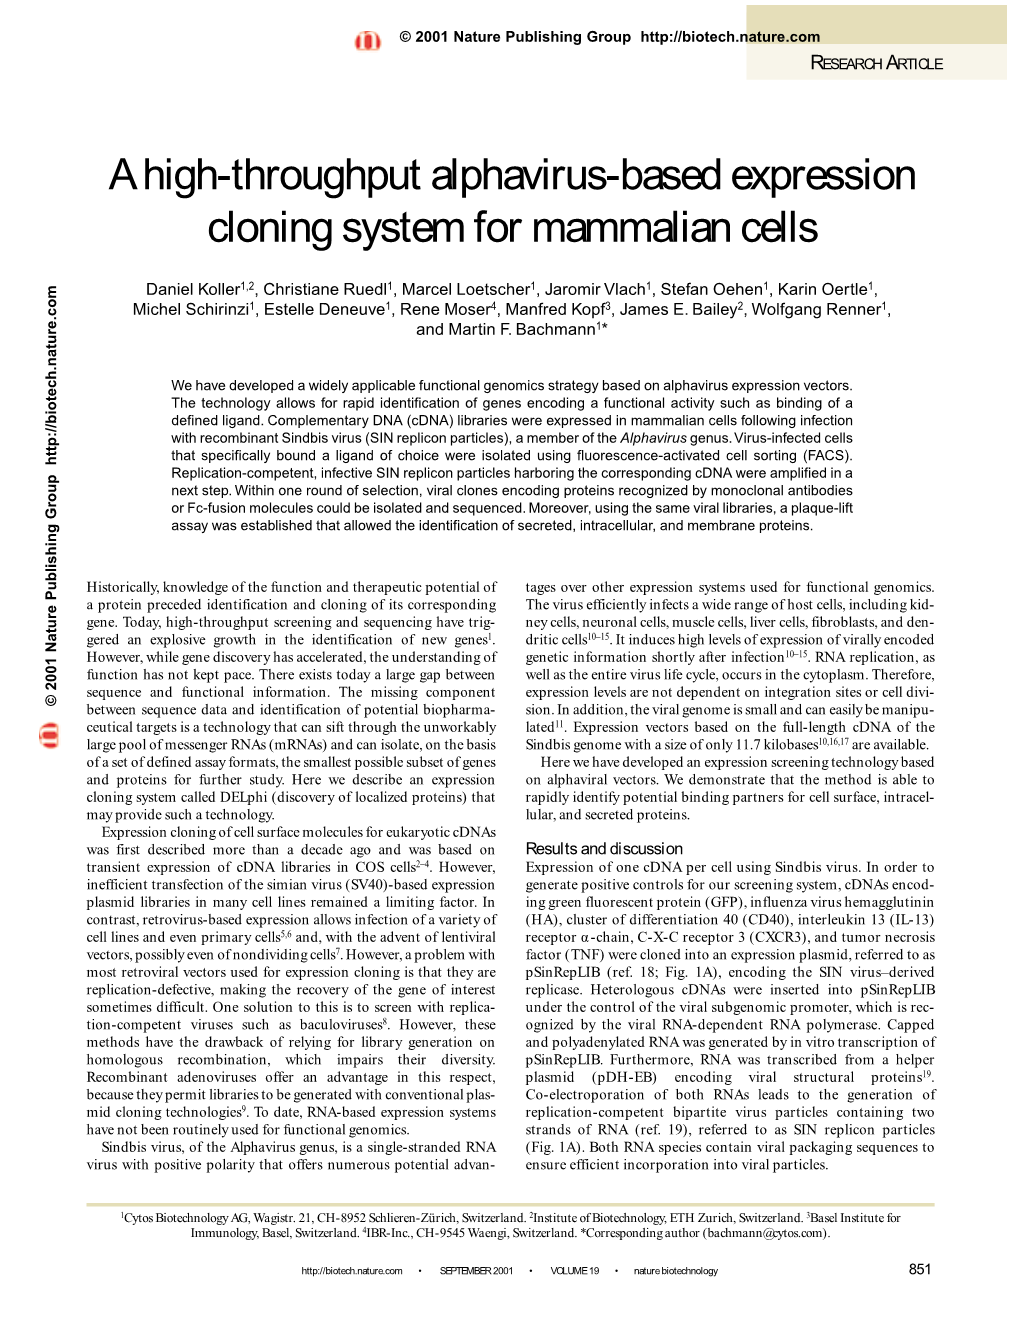 A High-Throughput Alphavirus-Based Expression Cloning System for Mammalian Cells